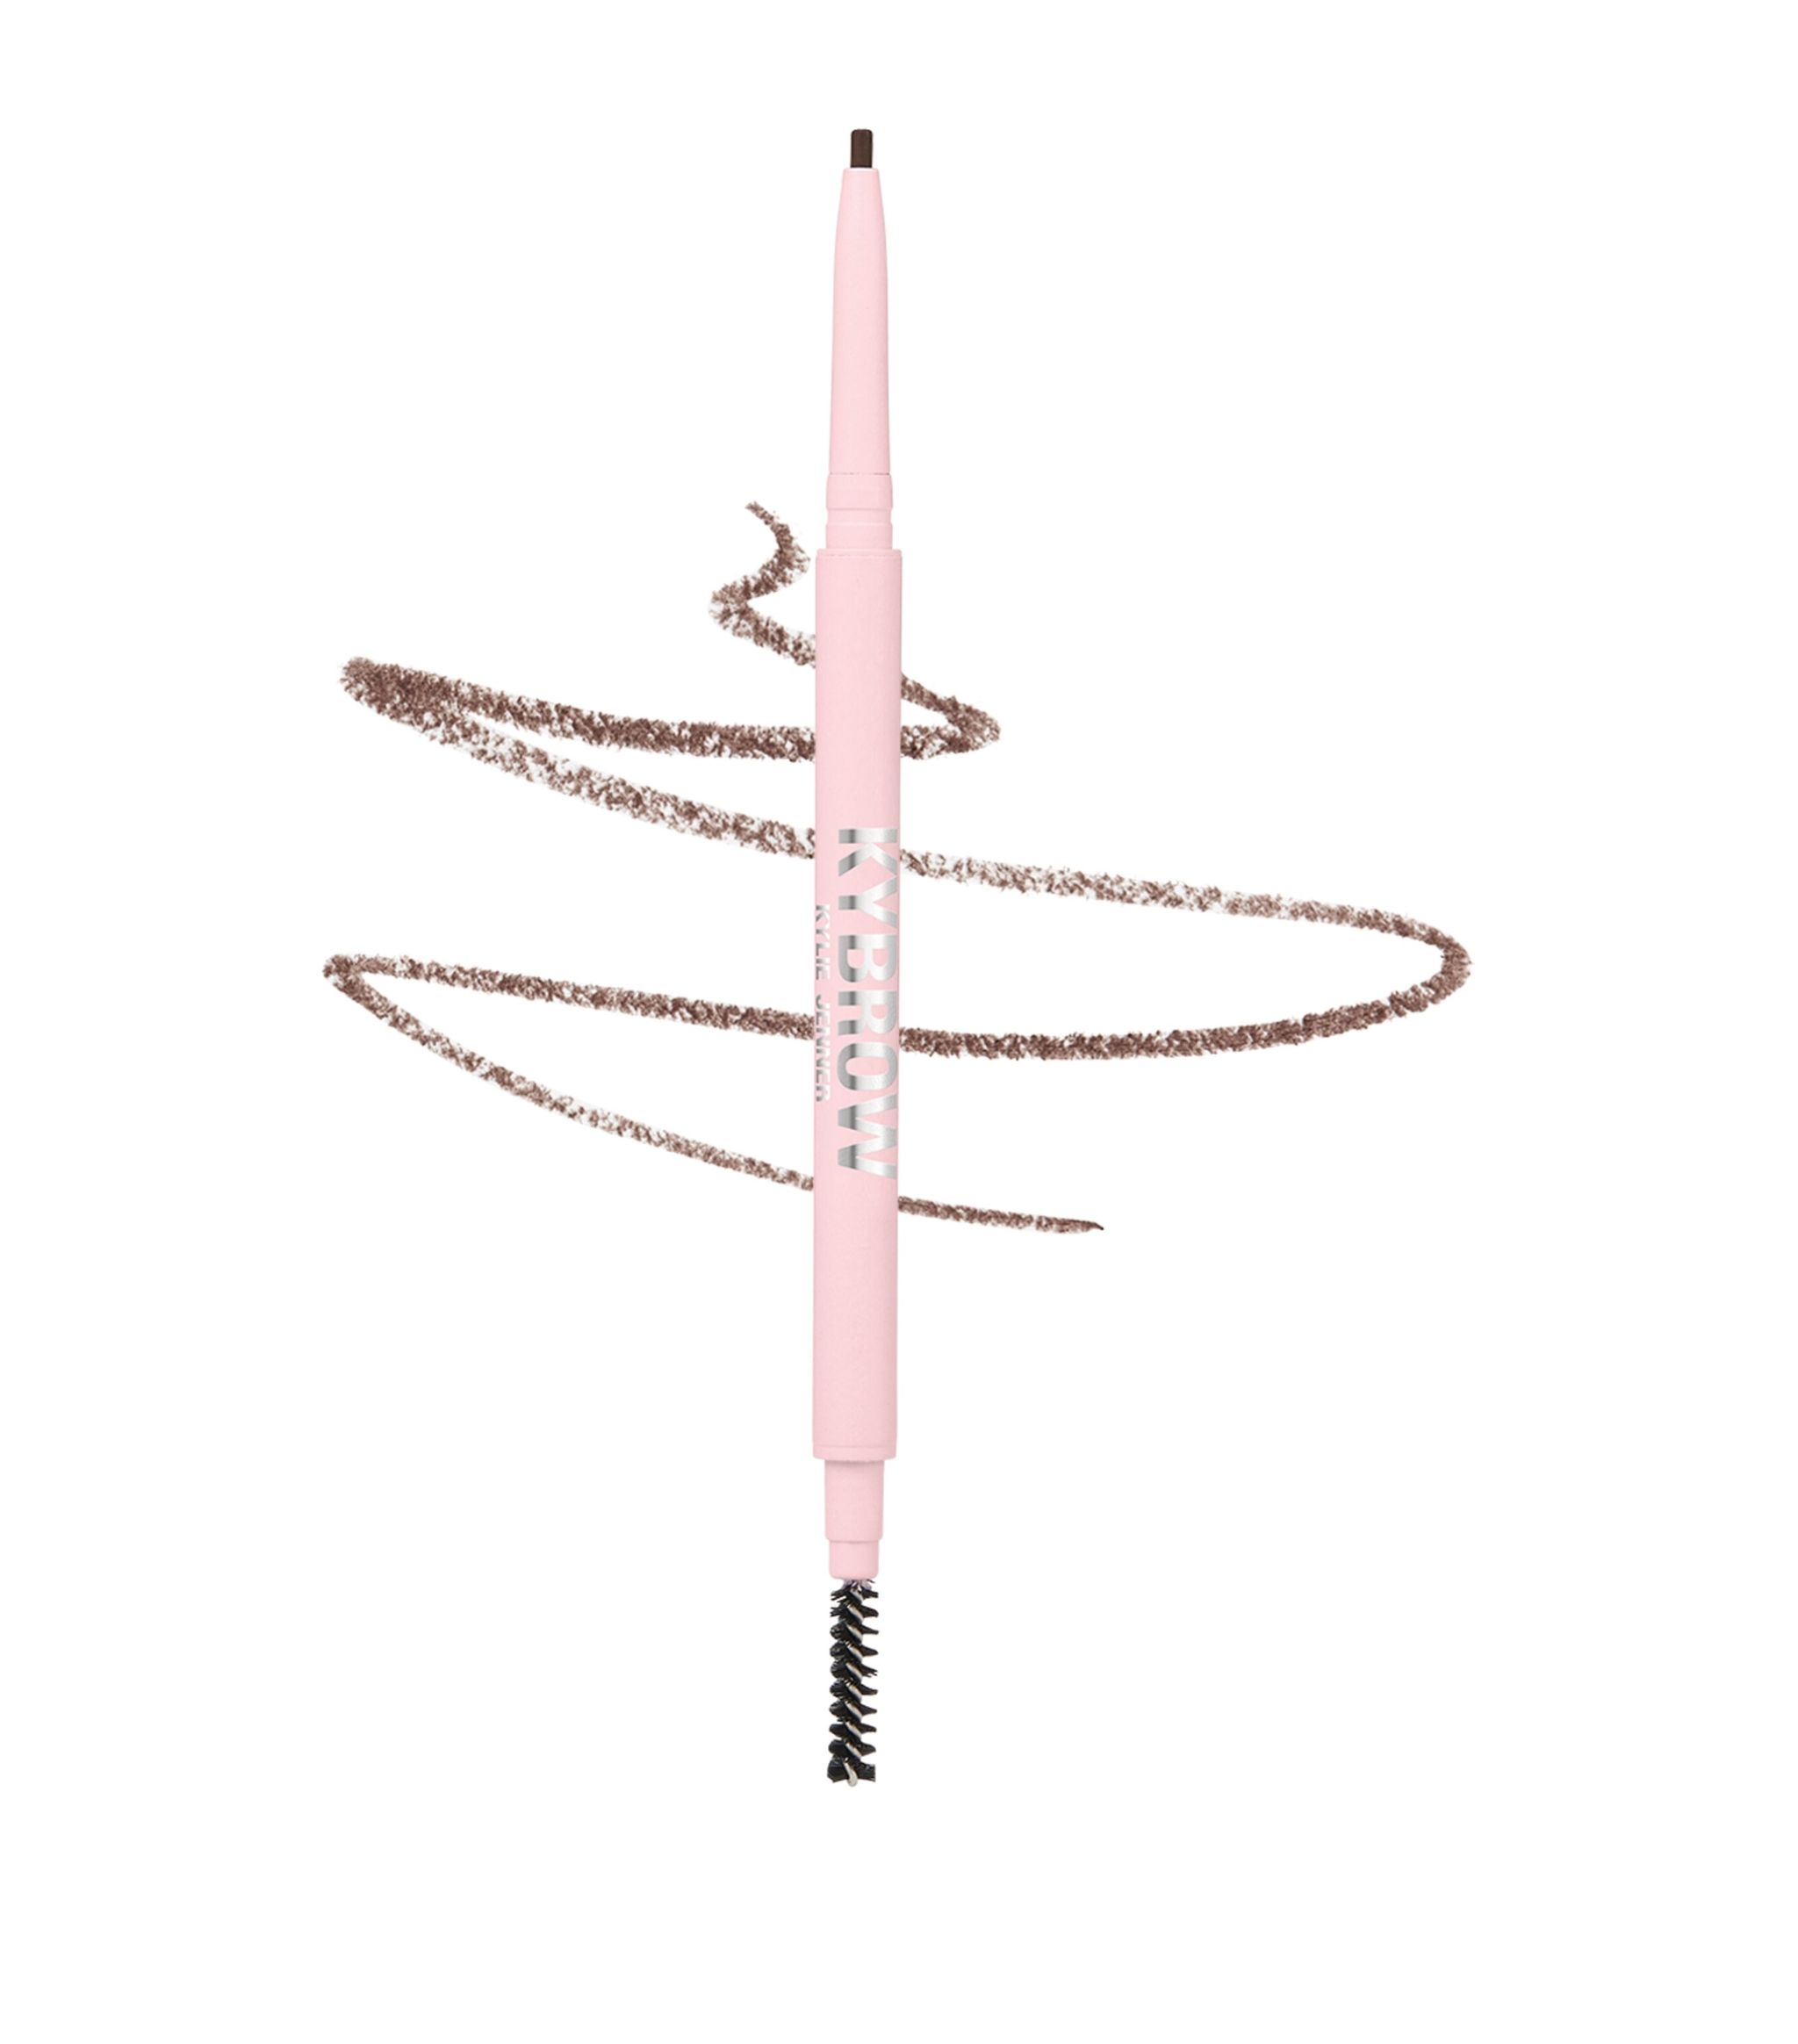 Kylie Cosmetics Kybrow Pencil in Dark Brown